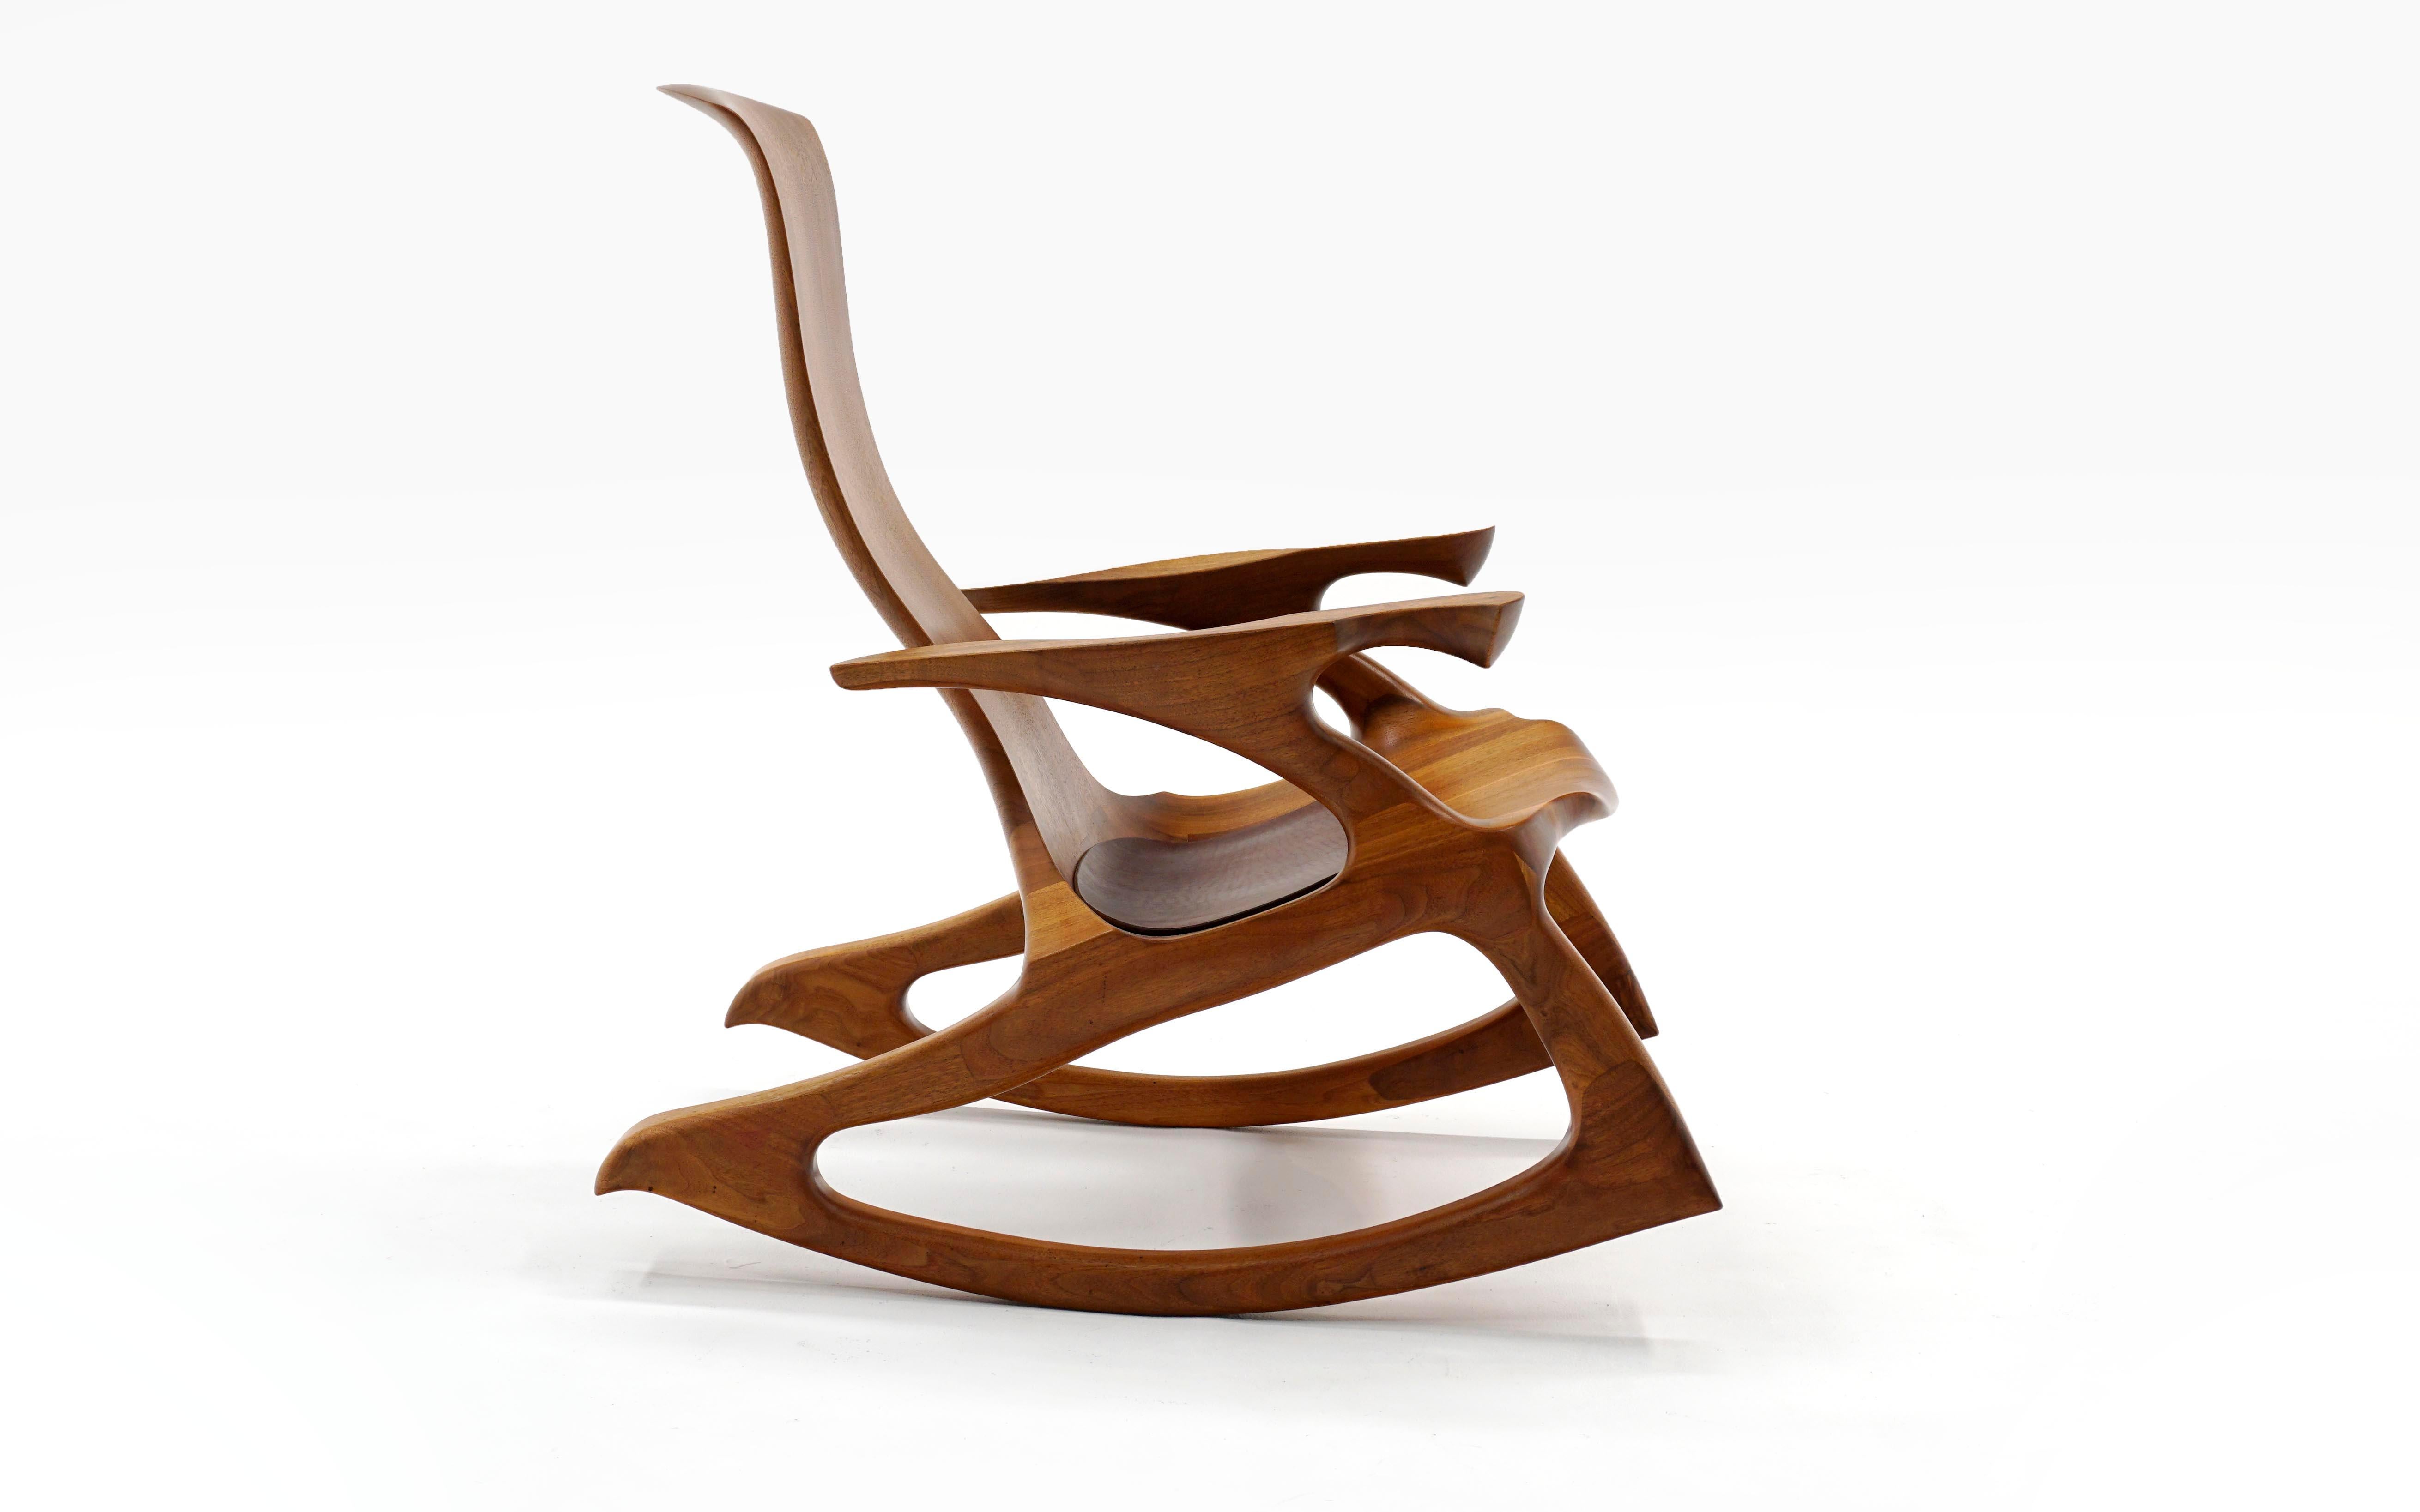 American Craftsman American Studio Craft Sculptural Walnut Rocking Chair, Hand Crafted, Marked